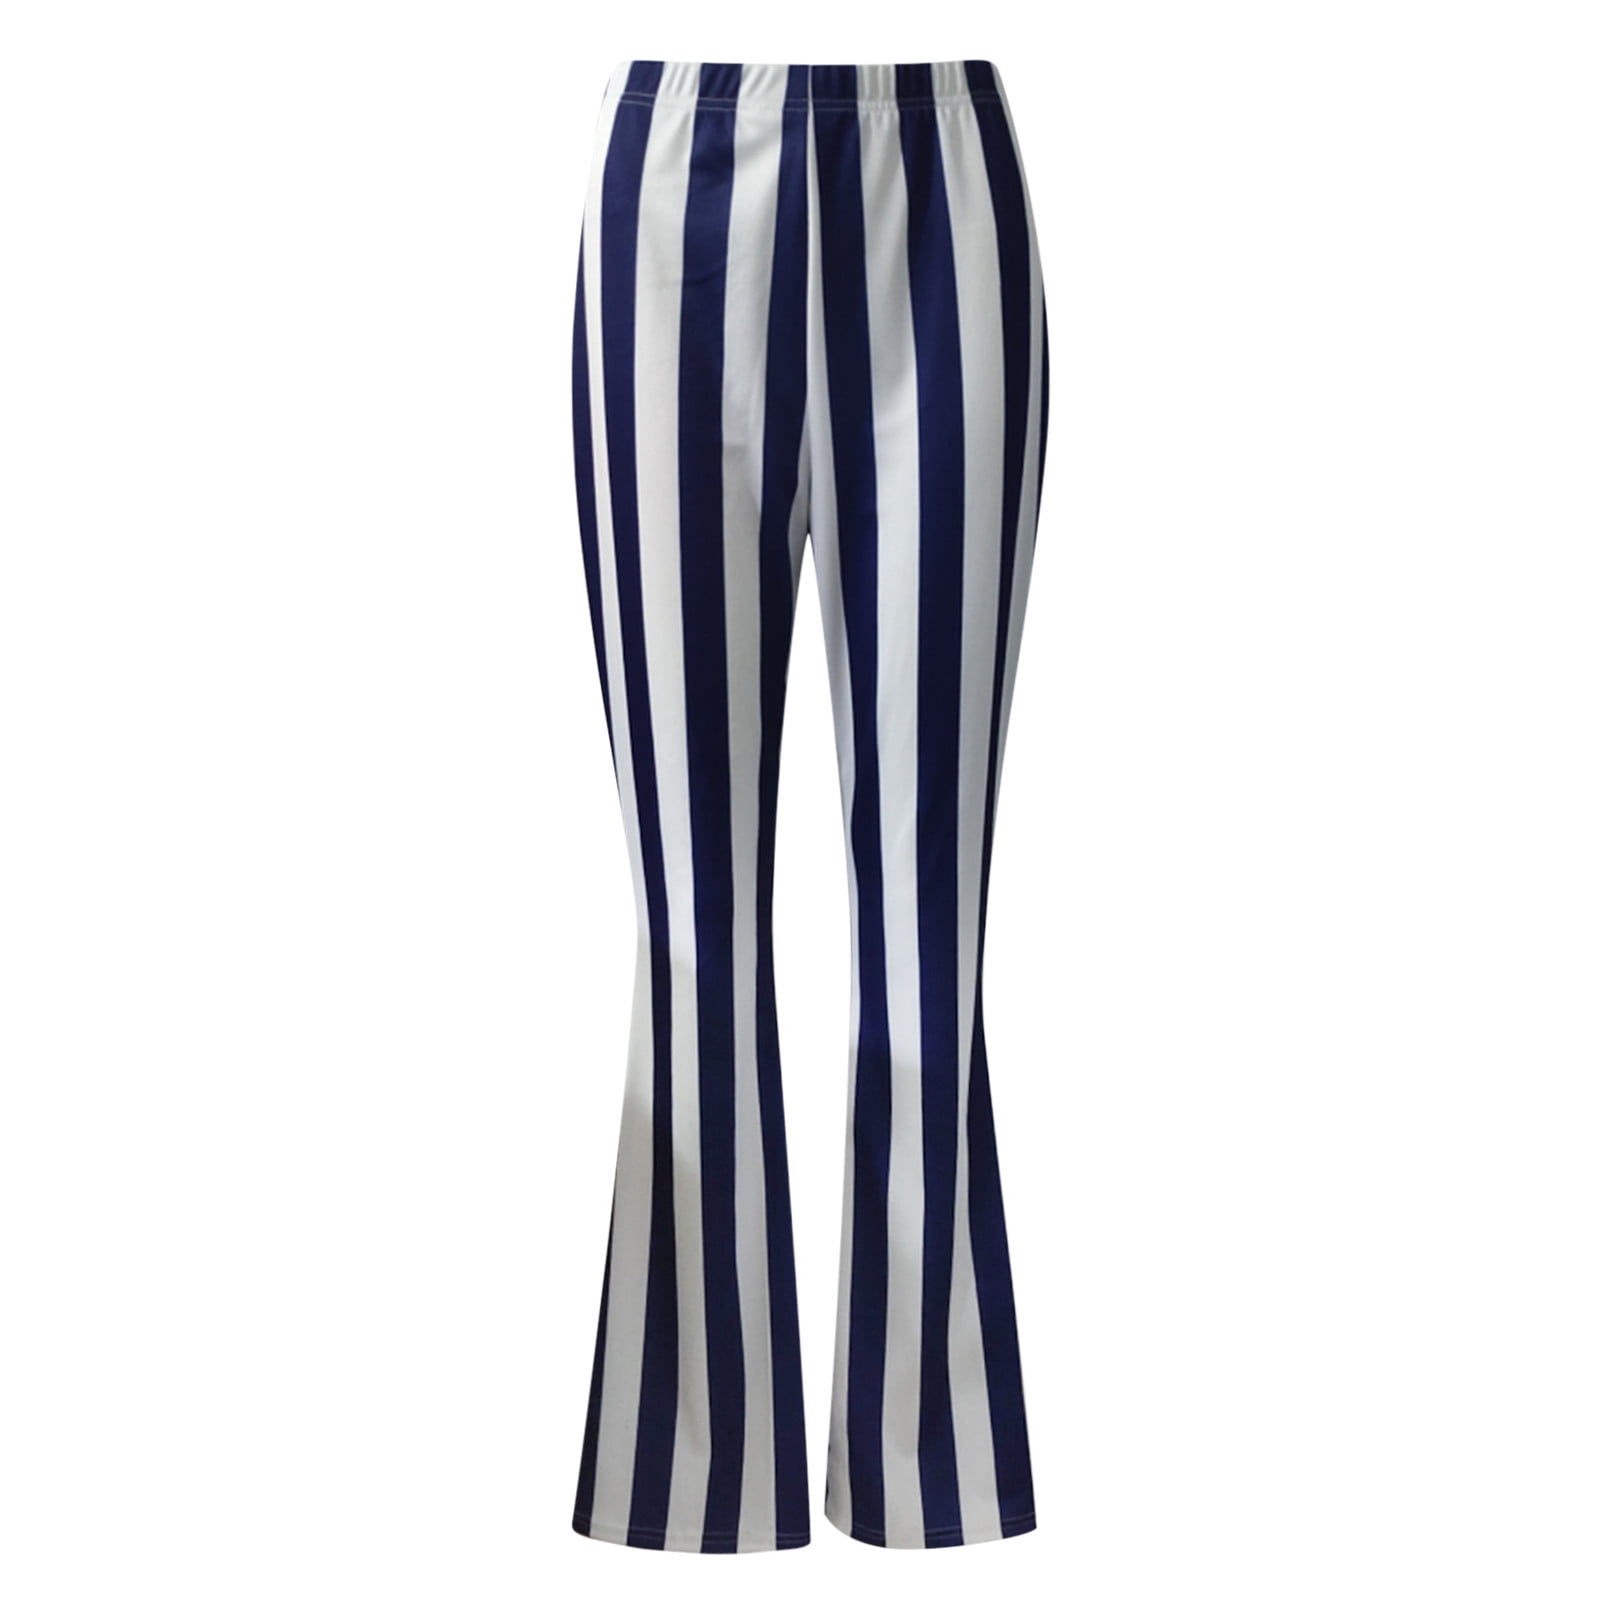 Bravetoshop-Women Pants Bell Bottoms High Waist Stretch Vertical Stripe Flare Trousers 